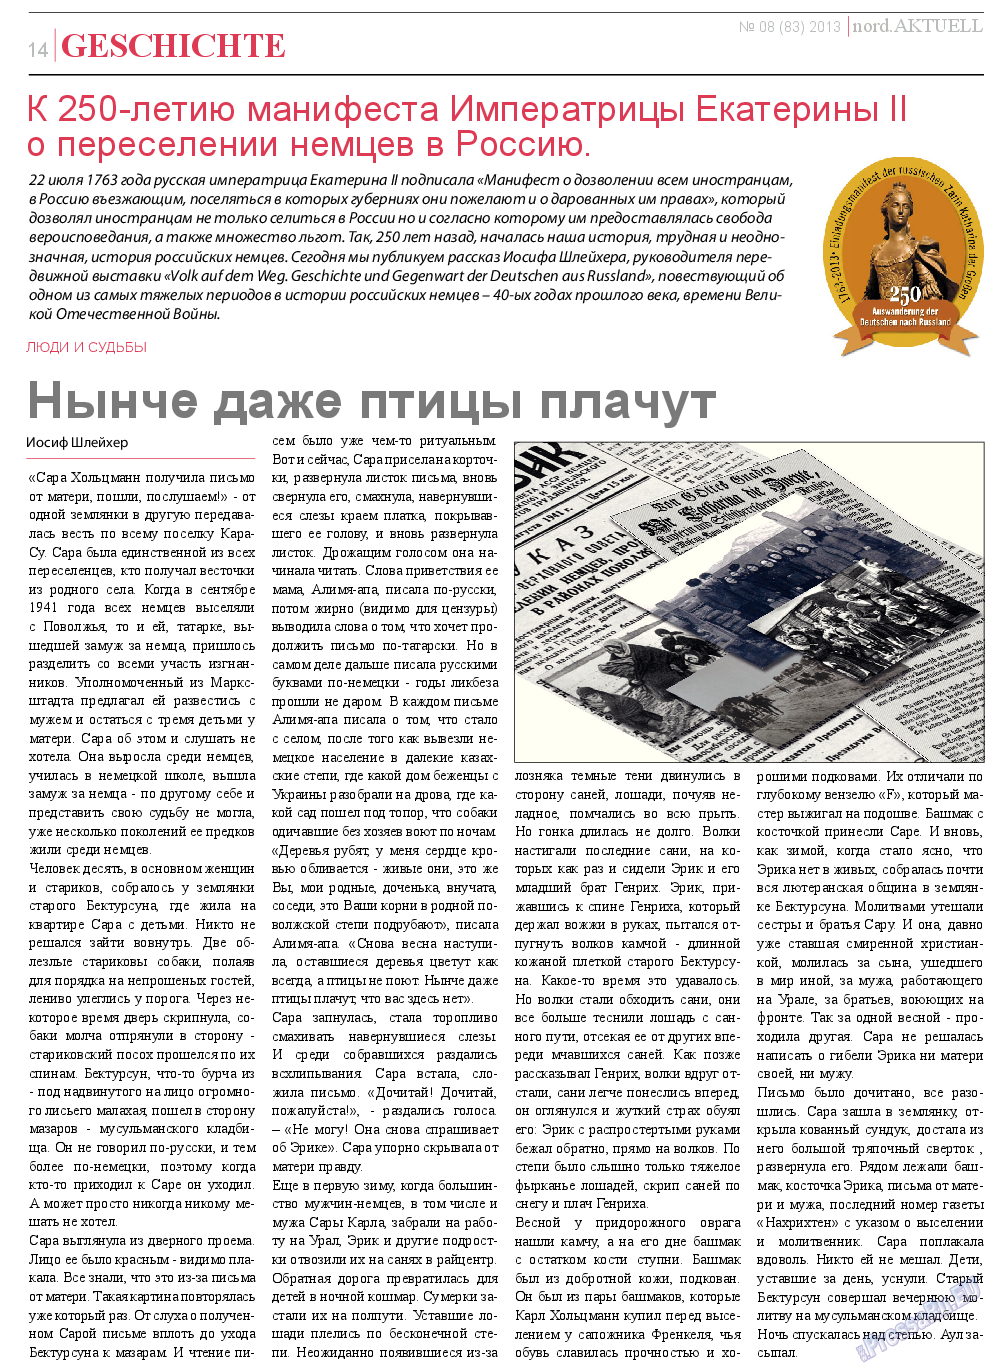 nord.Aktuell, газета. 2013 №8 стр.14